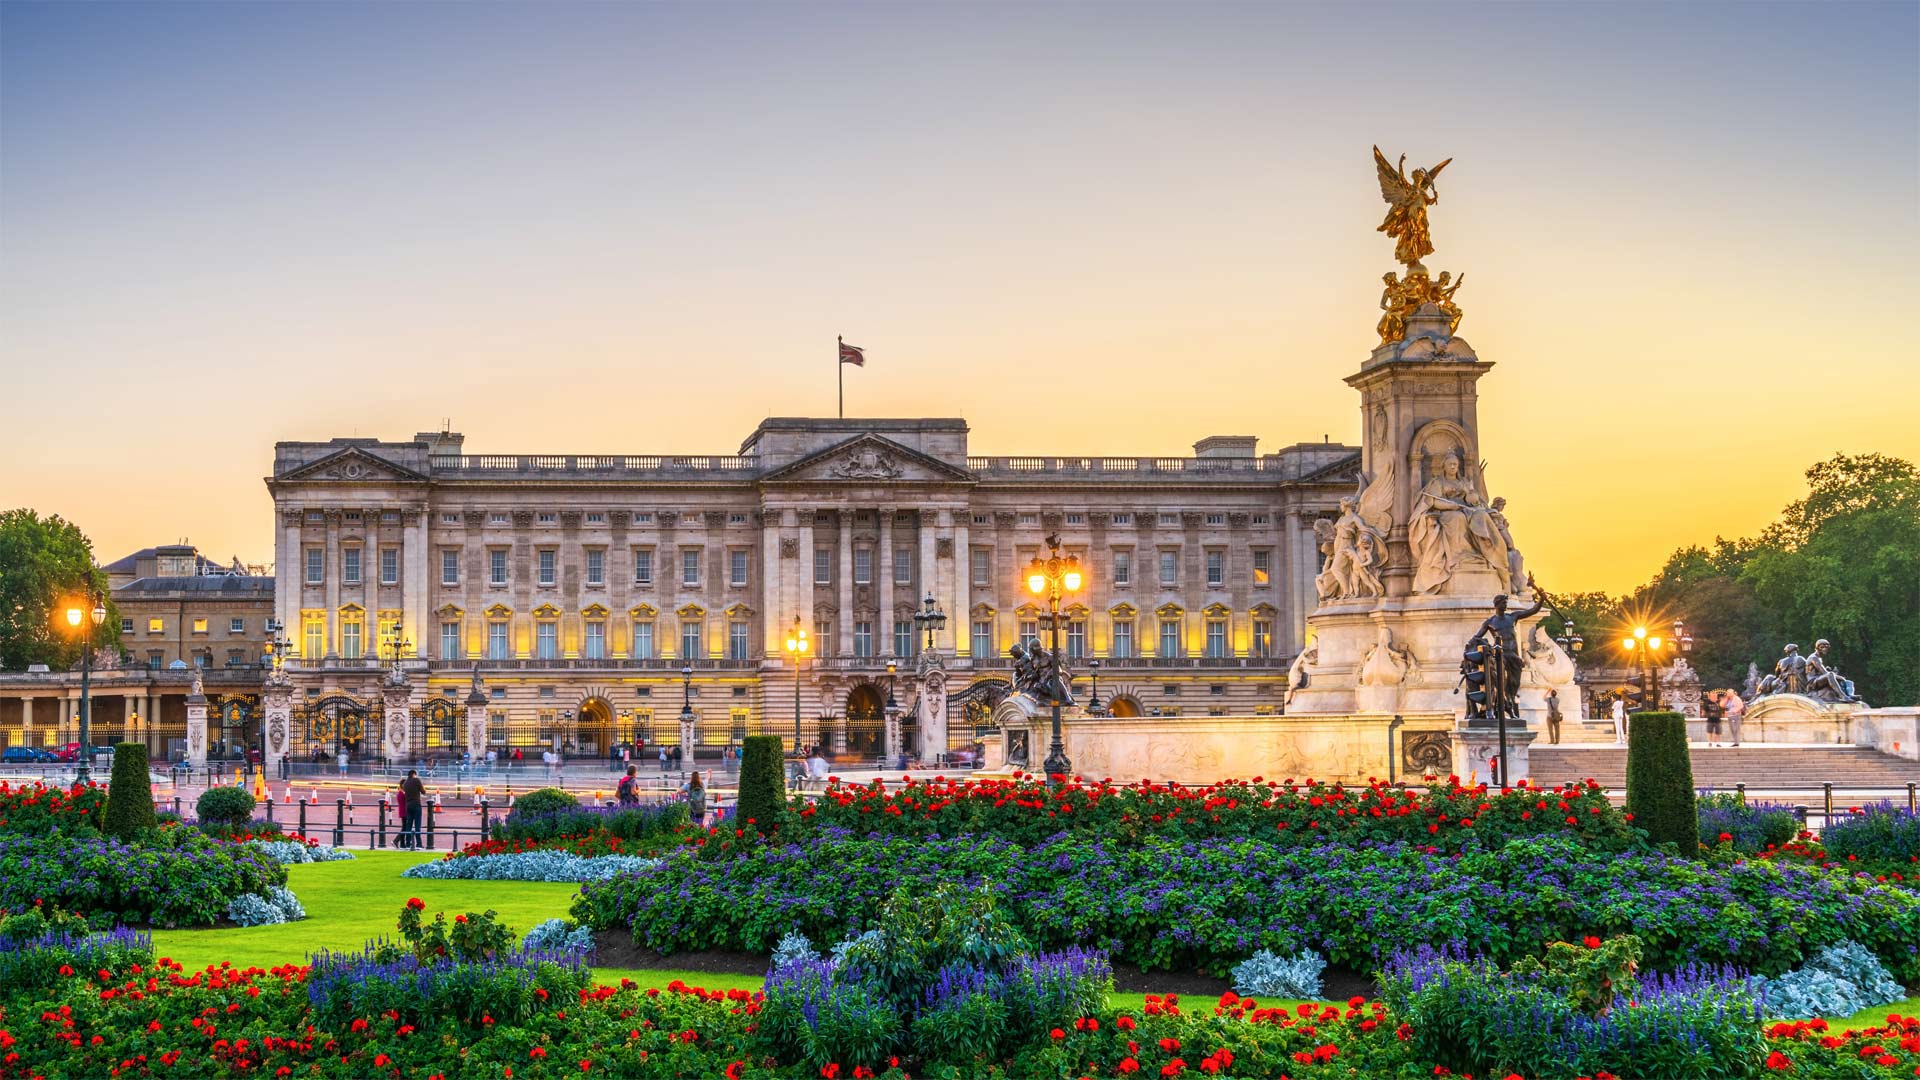 Buckingham Palace in London, England - Pajor Pawel/Shutterstock)